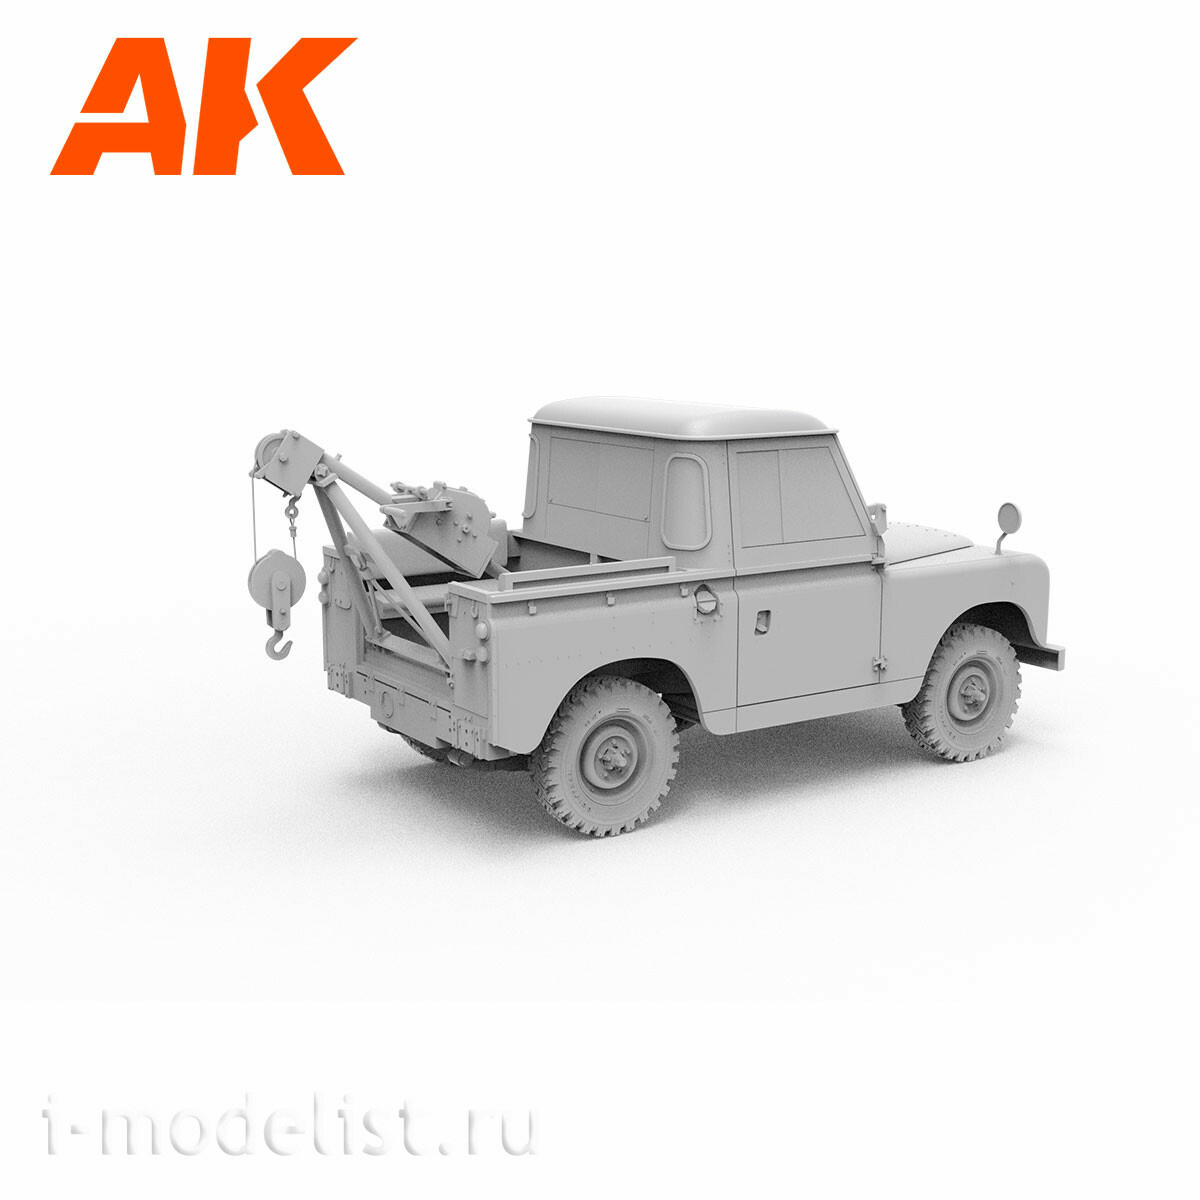 AK35014 AK Interactive 1/35 SUV Land Rover 88 Series IIA Tow Truck